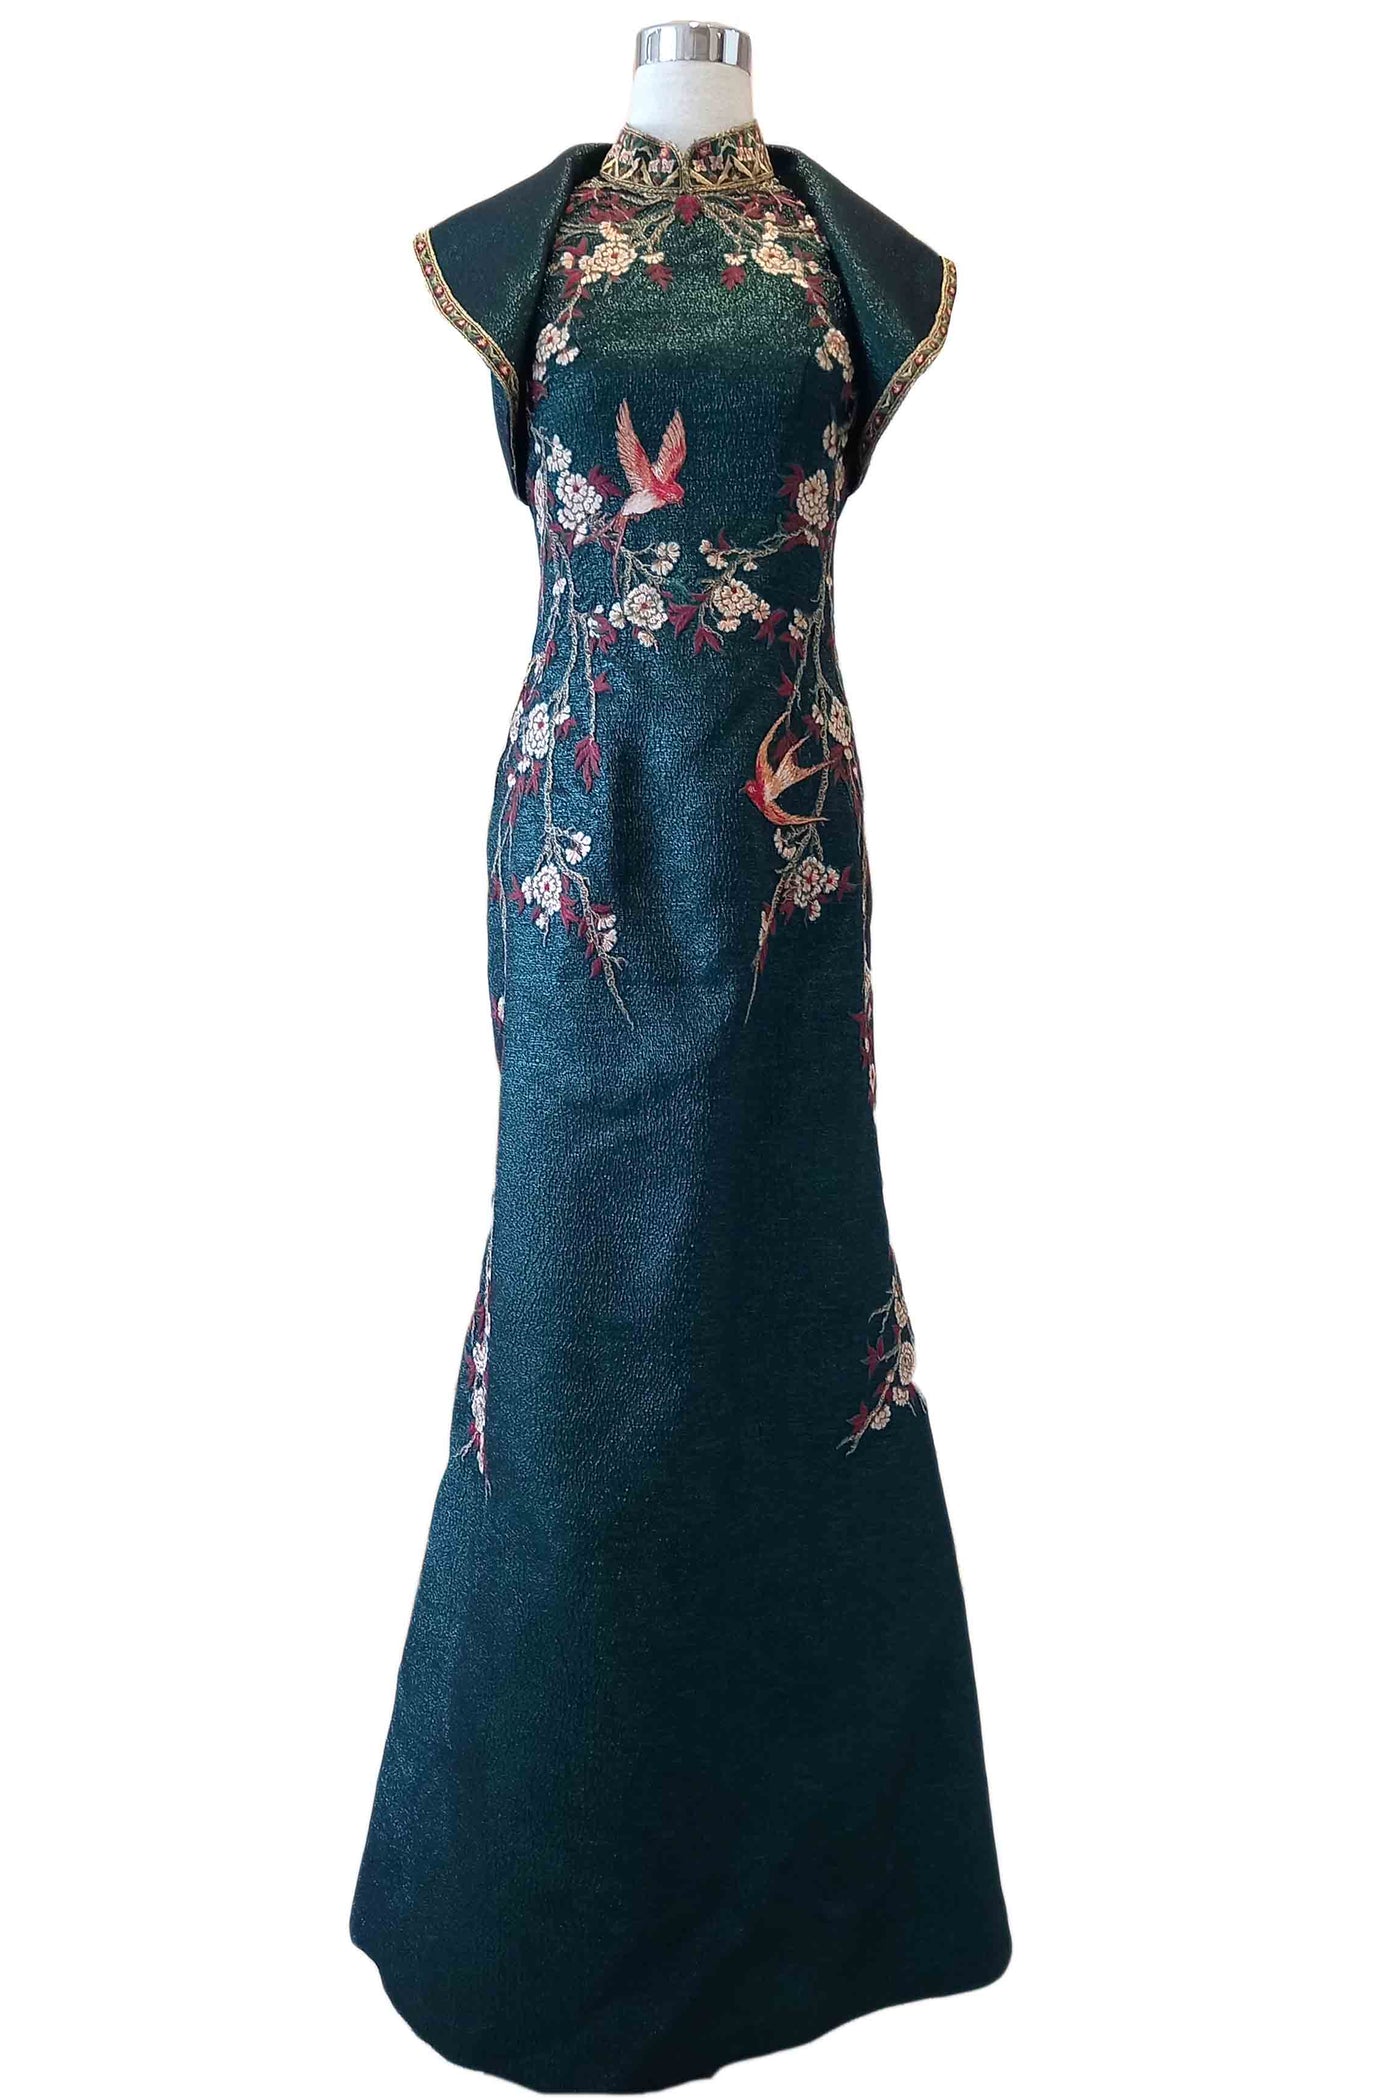 Rent : Albert Yanuar - Green Cheongsam Embroidery Gown